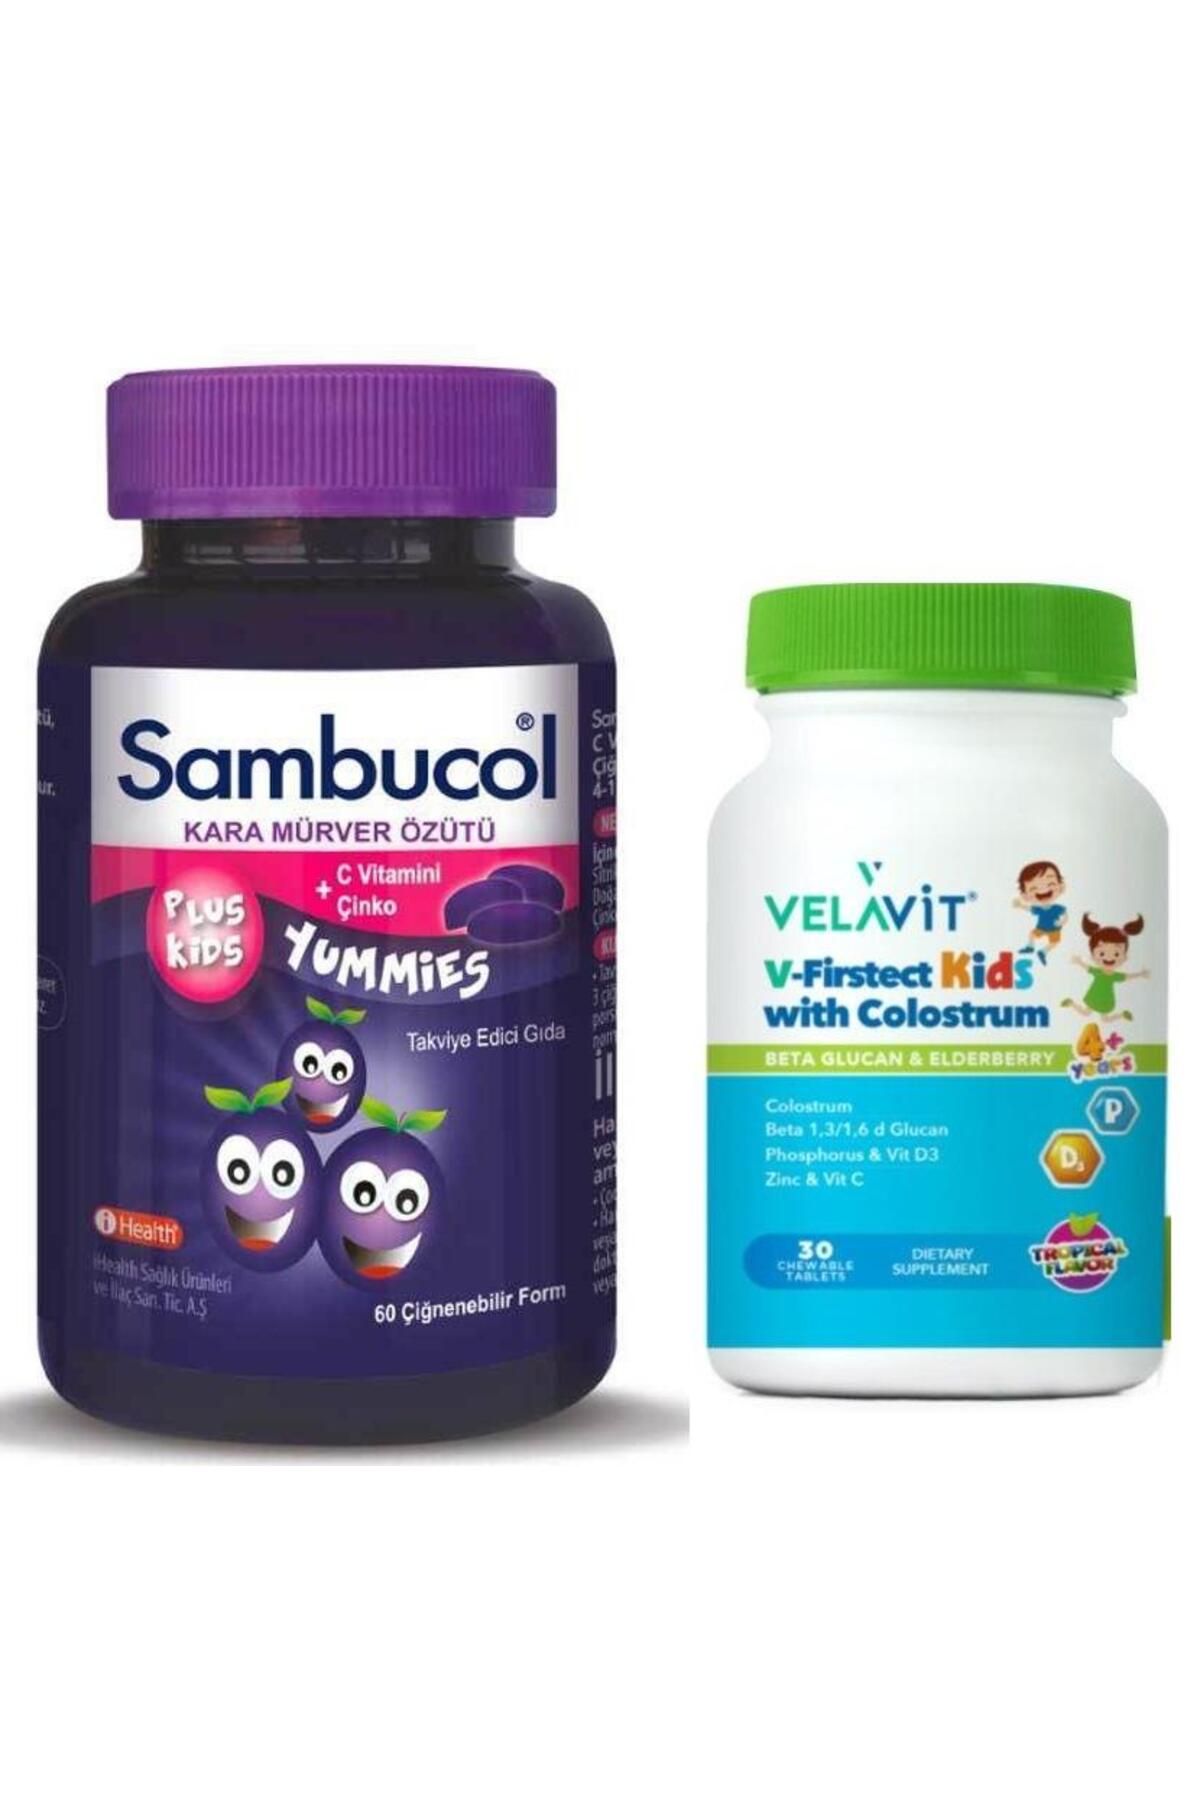 Sambucol Plus Kids Yummies 60 Çiğneme Tableti Velavit V-firstect Kids With Colostrum 30 Tablet